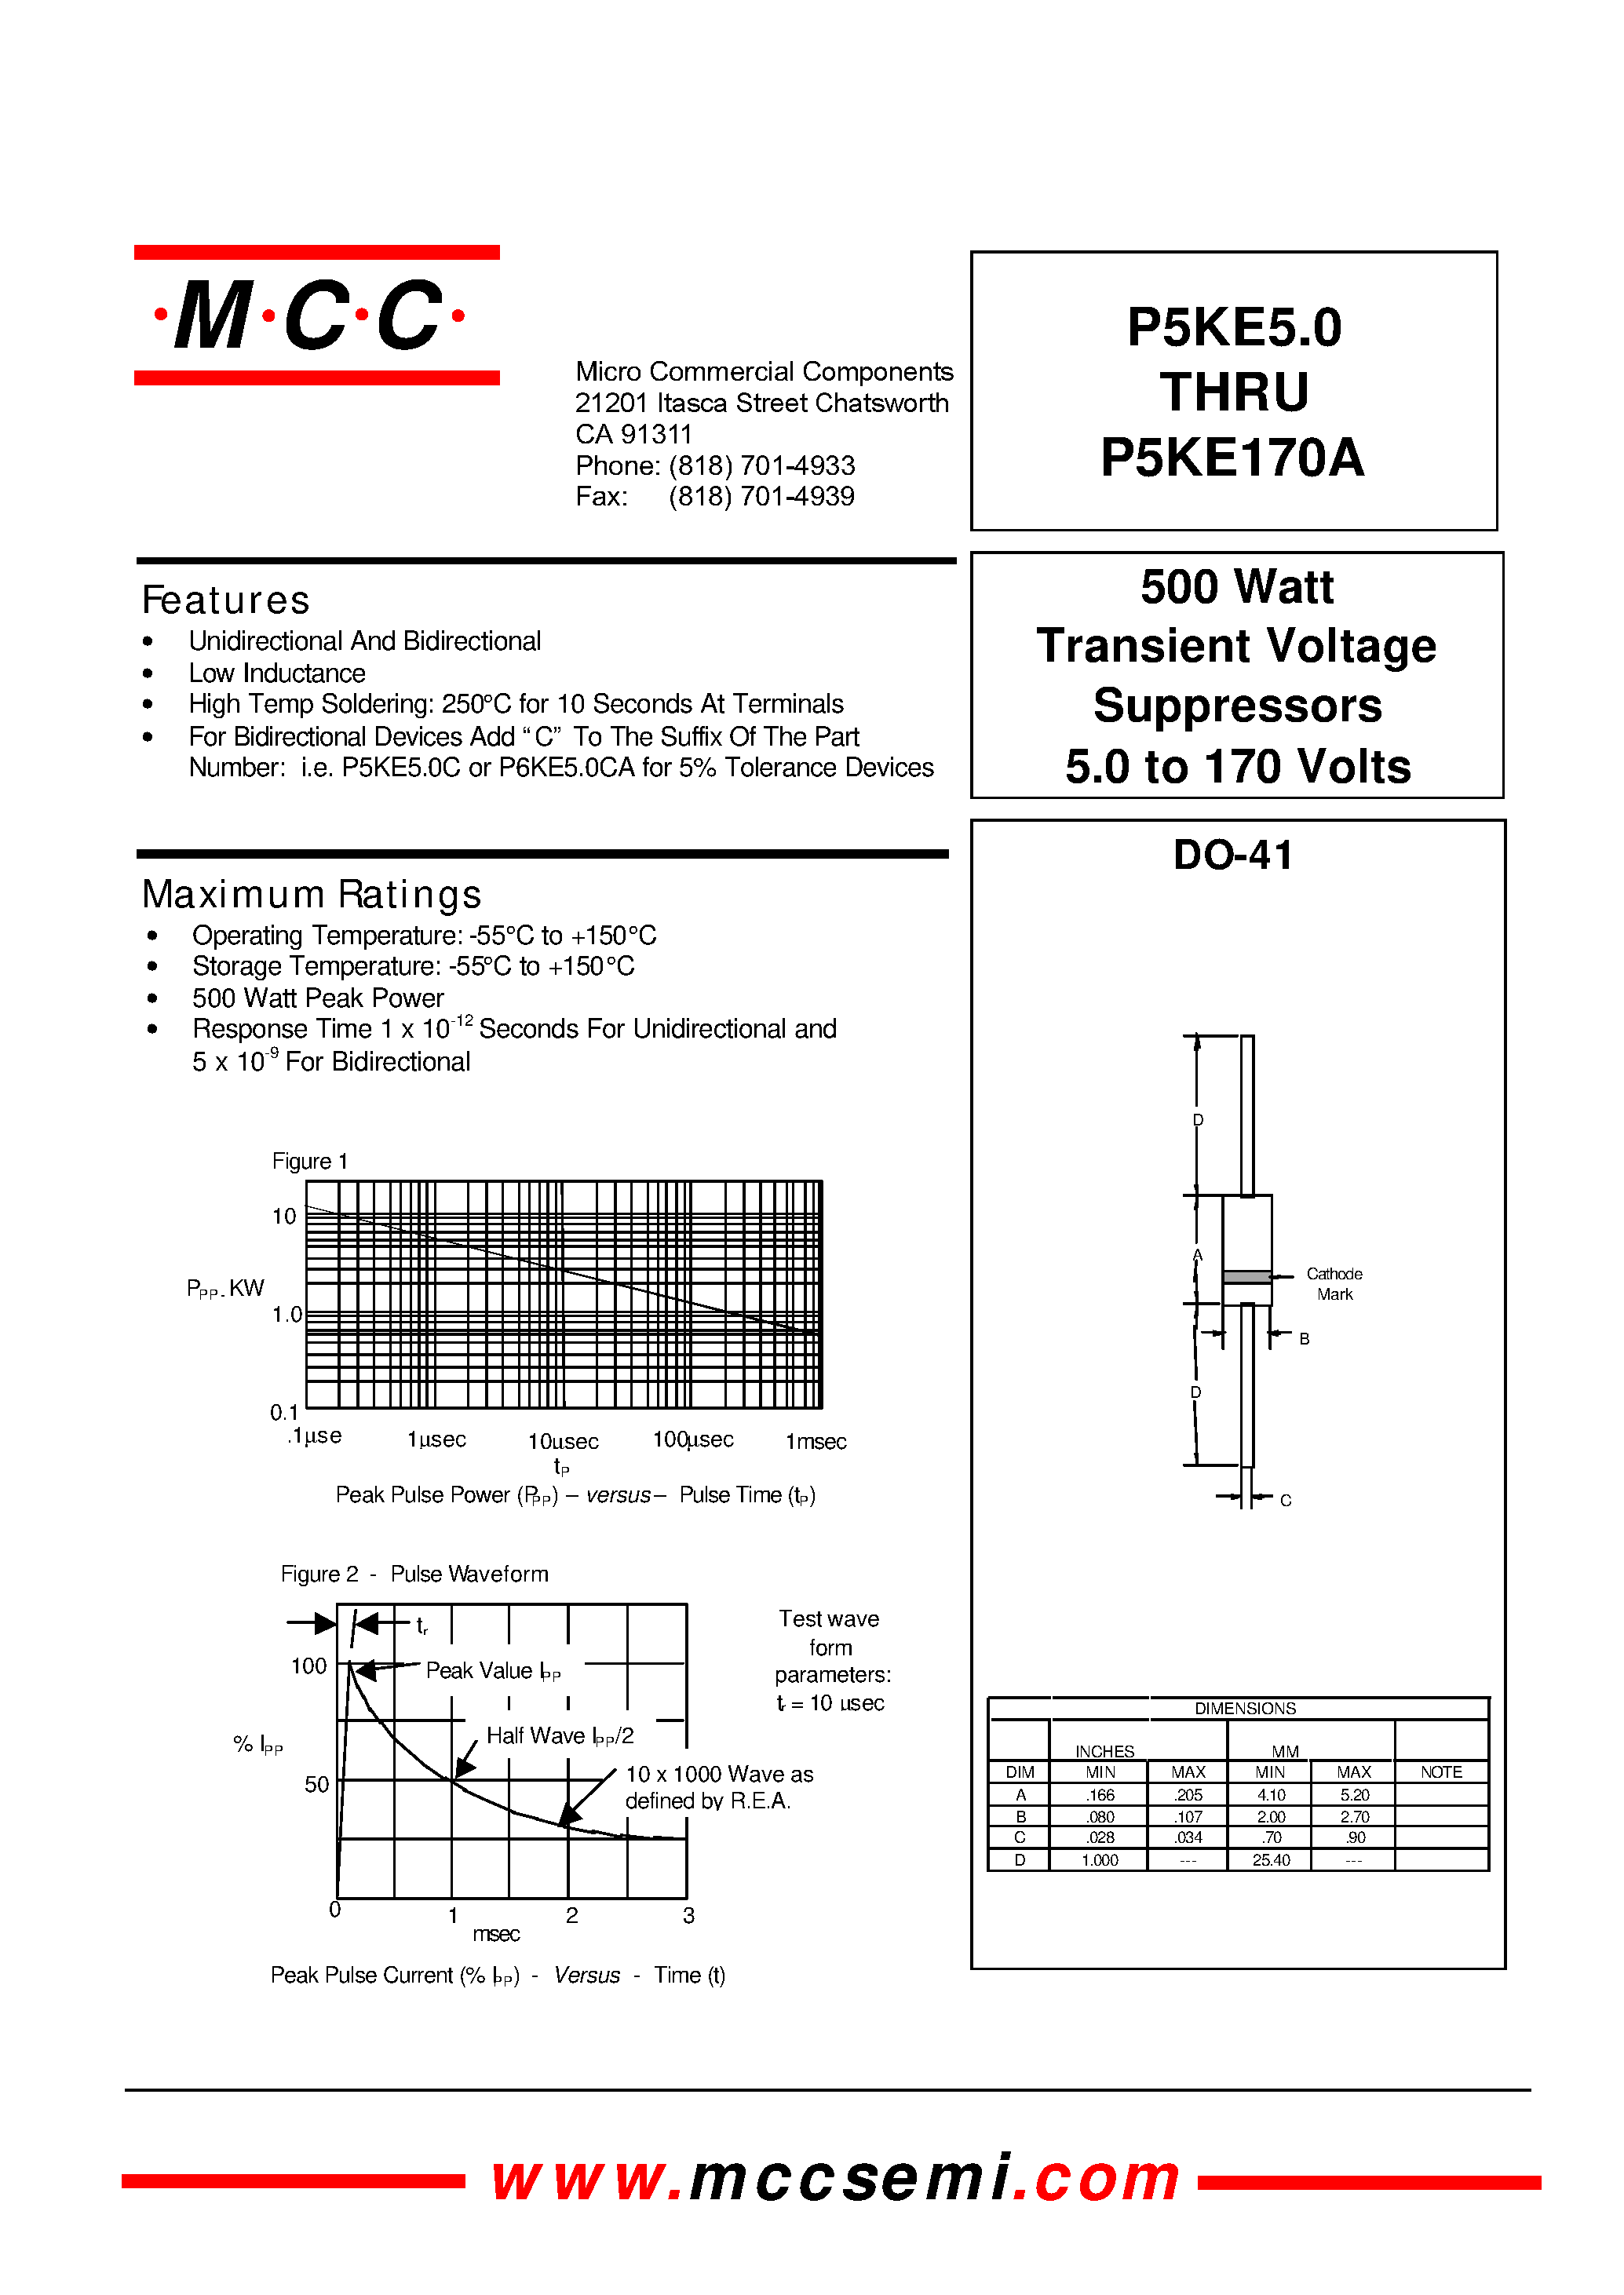 Даташит P5KE6.5 - 500 Watt Transient Voltage Suppressors 5.0 to 170 Volts страница 1